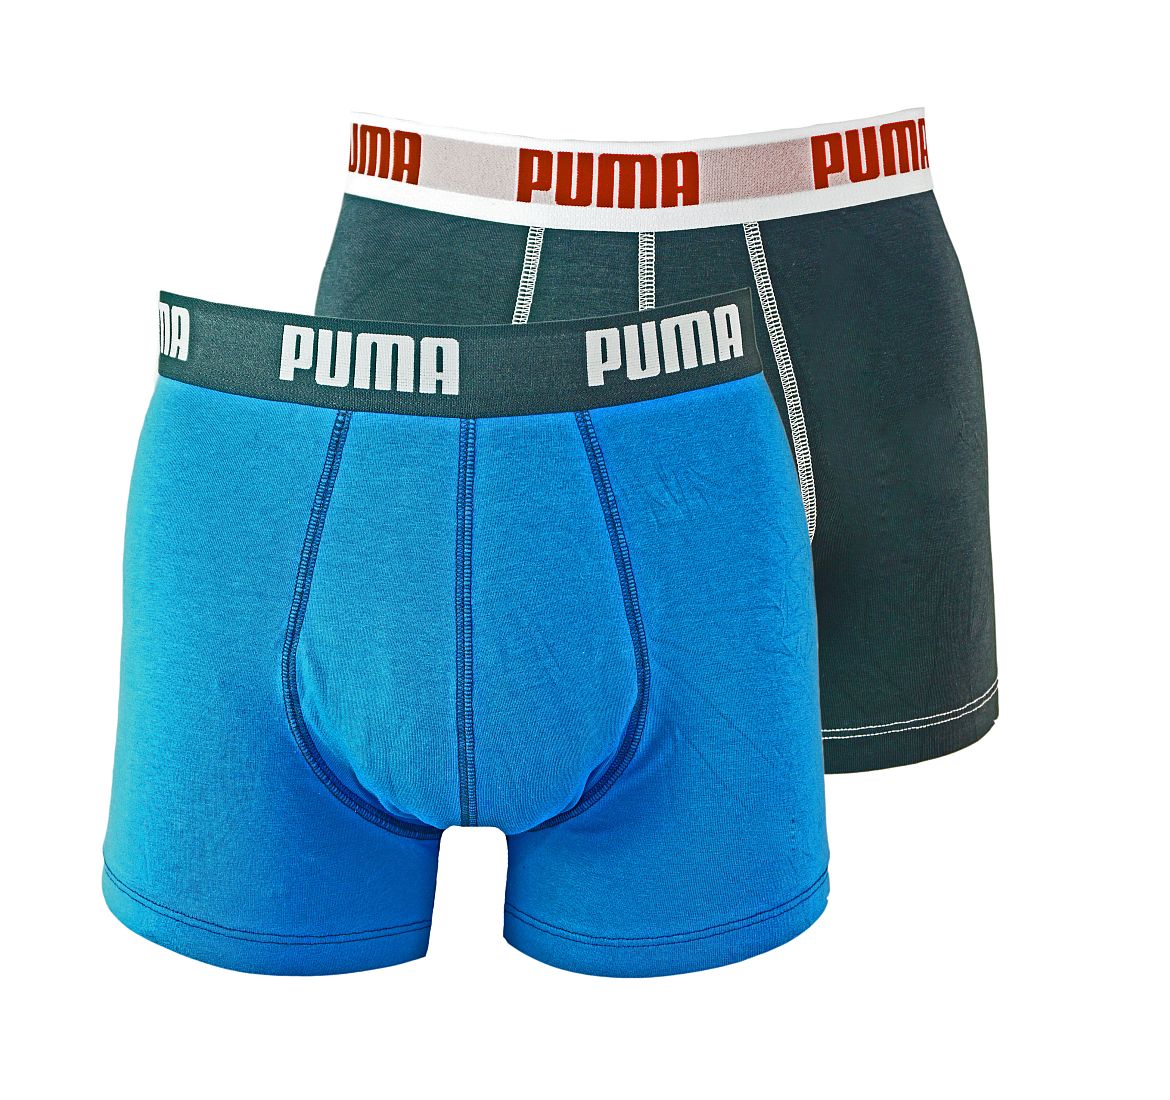 PUMA Shorts Unterhosen 2er Pack Boxer 521015001 056 020 blue SF17-PMS1